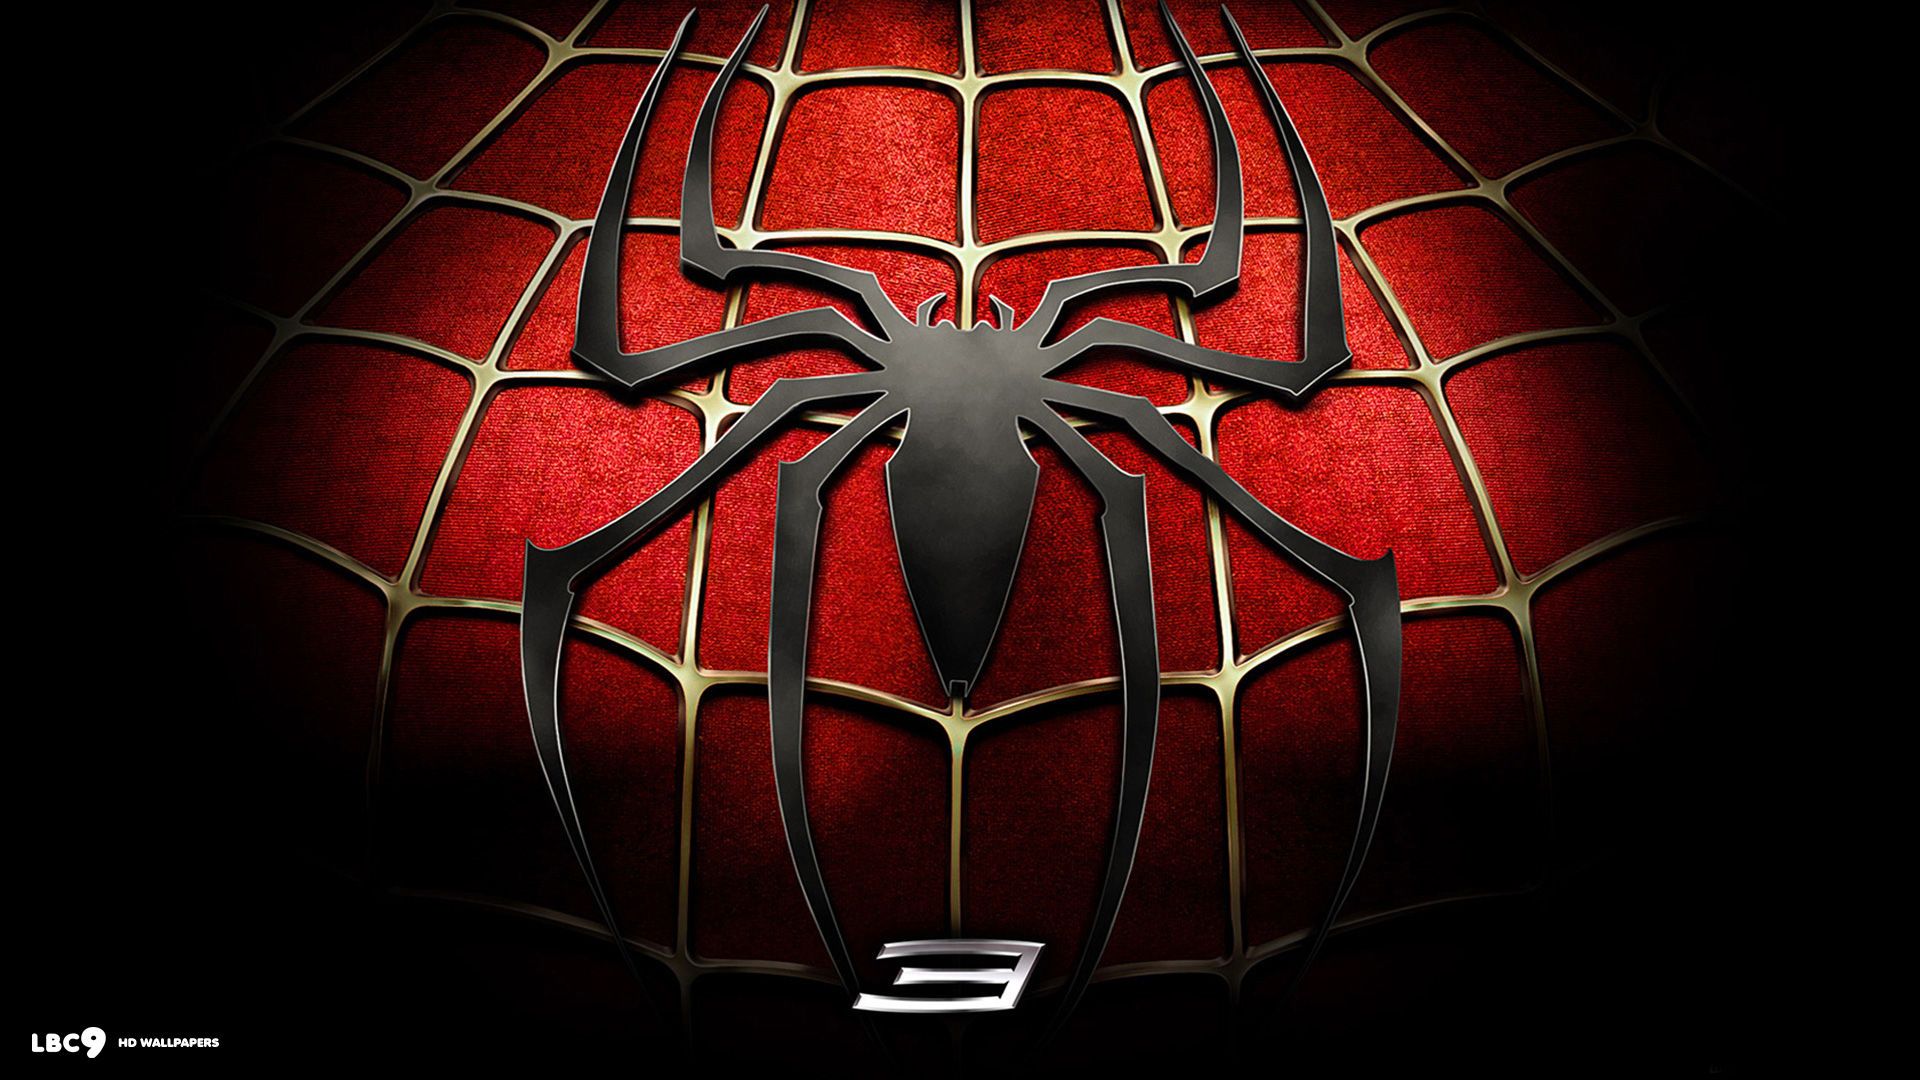 spiderman wallpaper hd 1080p